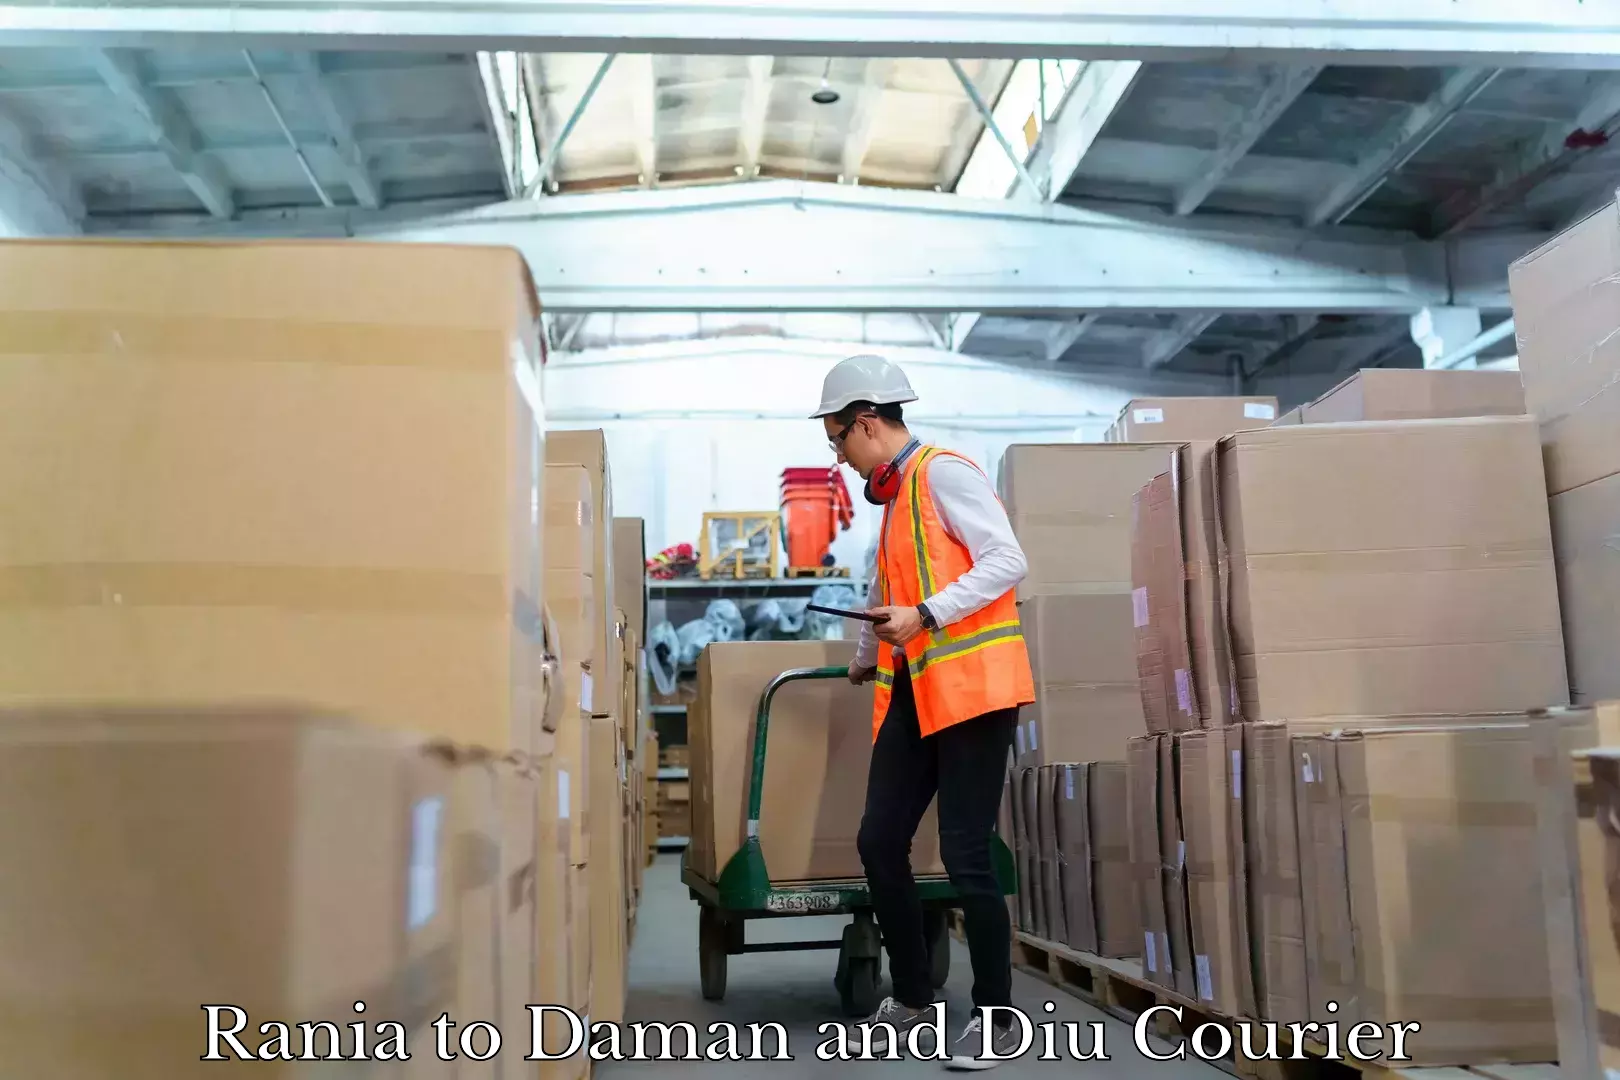 Efficient shipping operations Rania to Daman and Diu